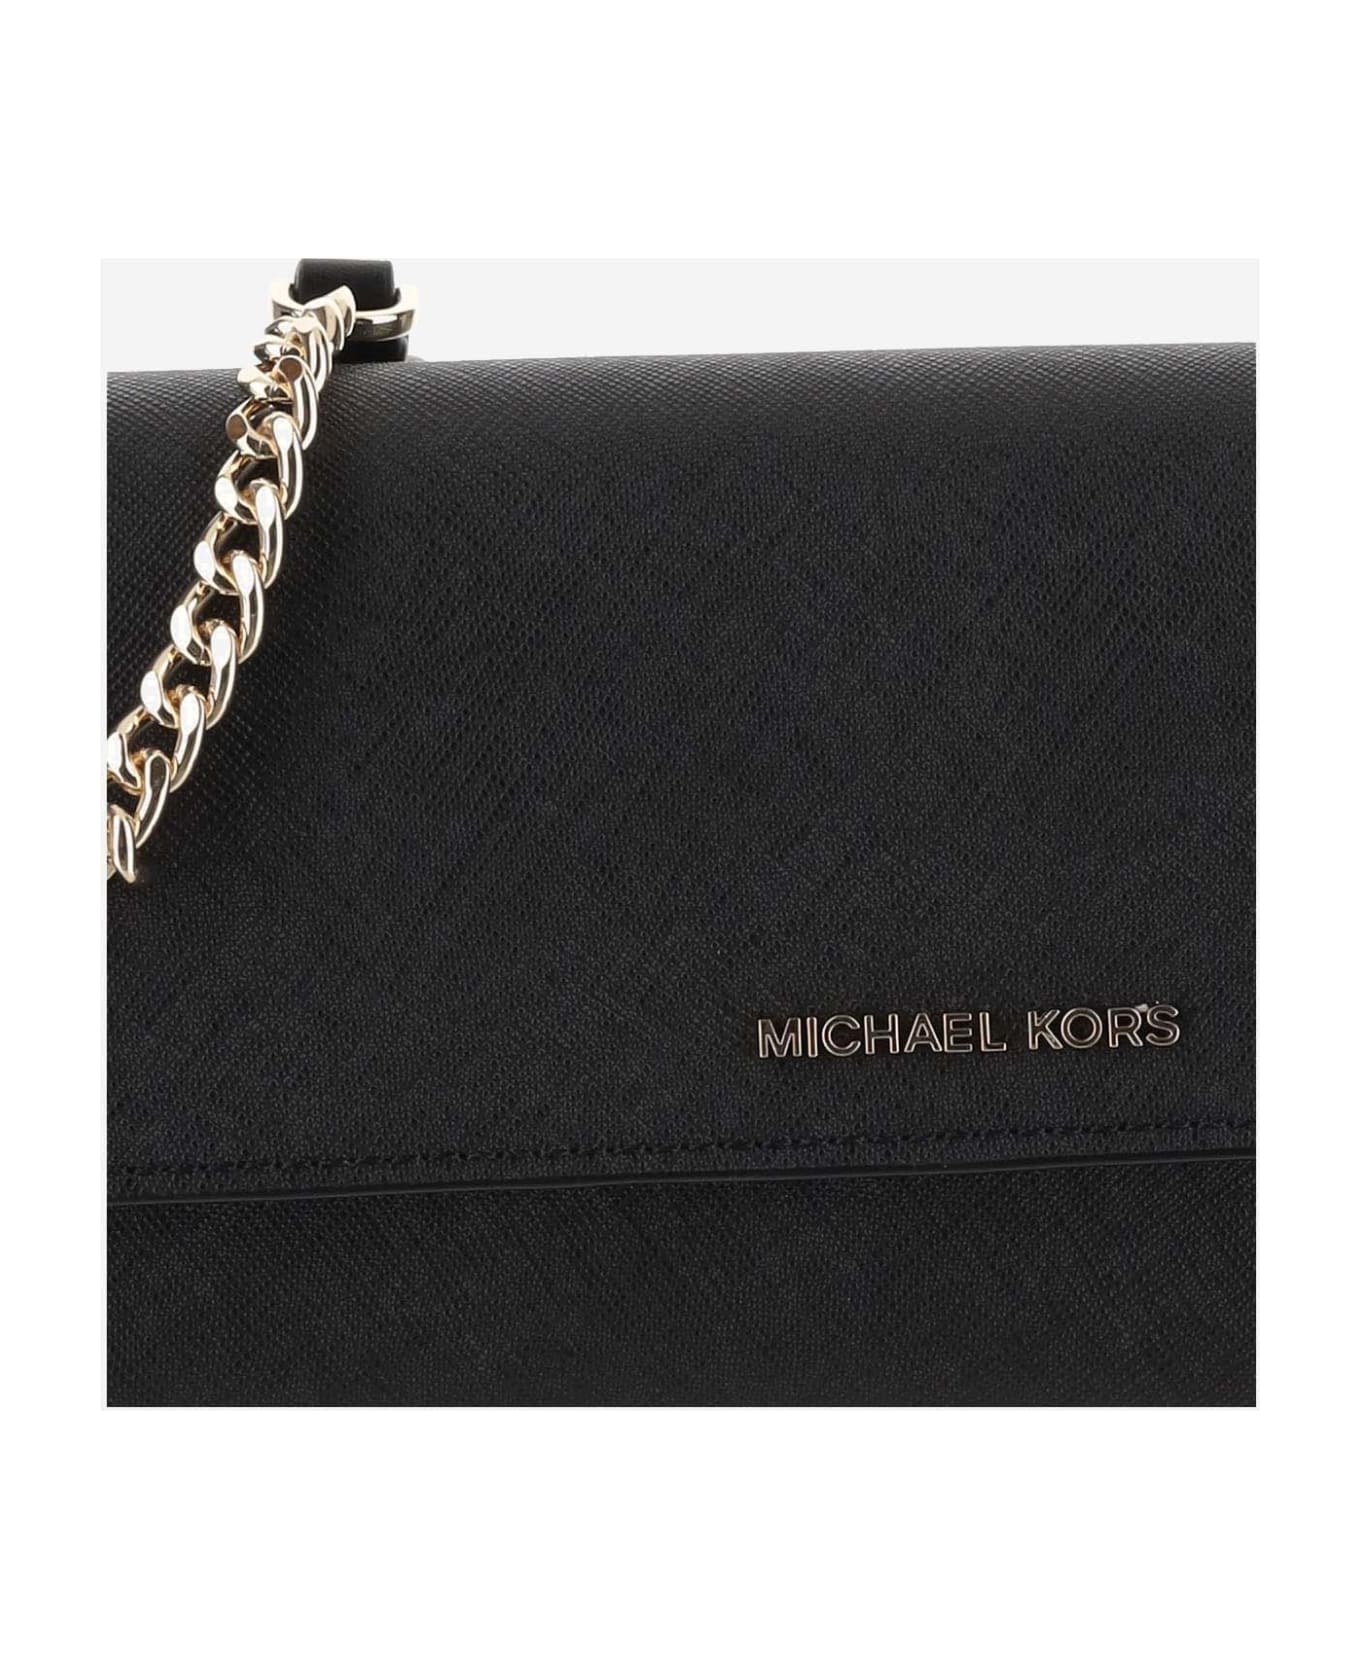 Michael Kors Wallet With Shoulder Strap - Black 財布